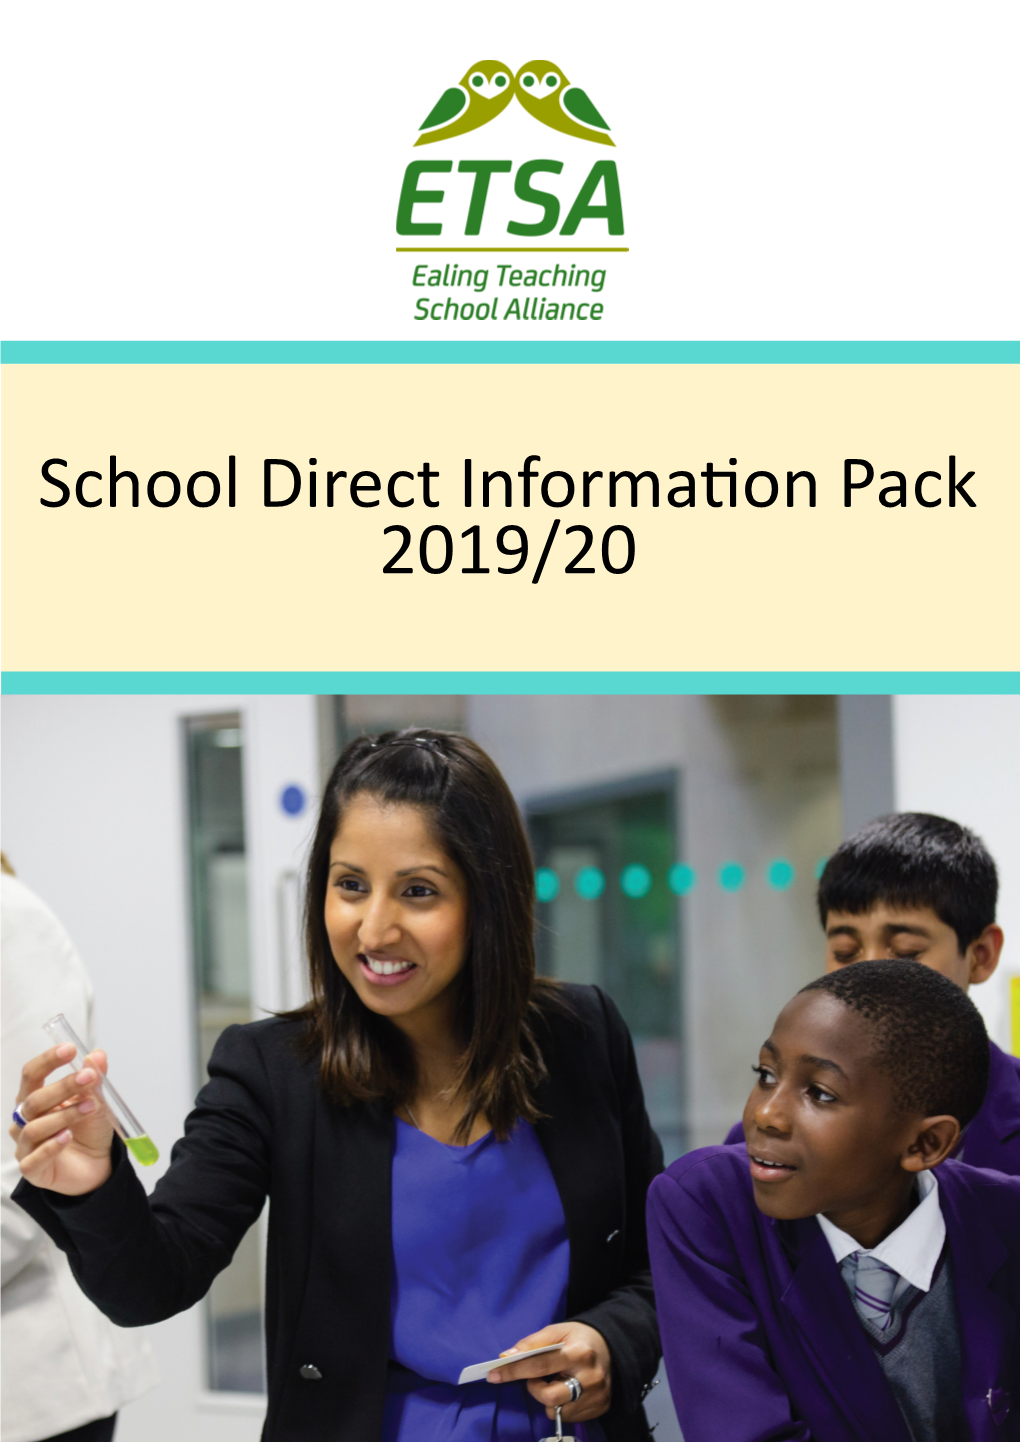 School Direct Information Pack 2019/20